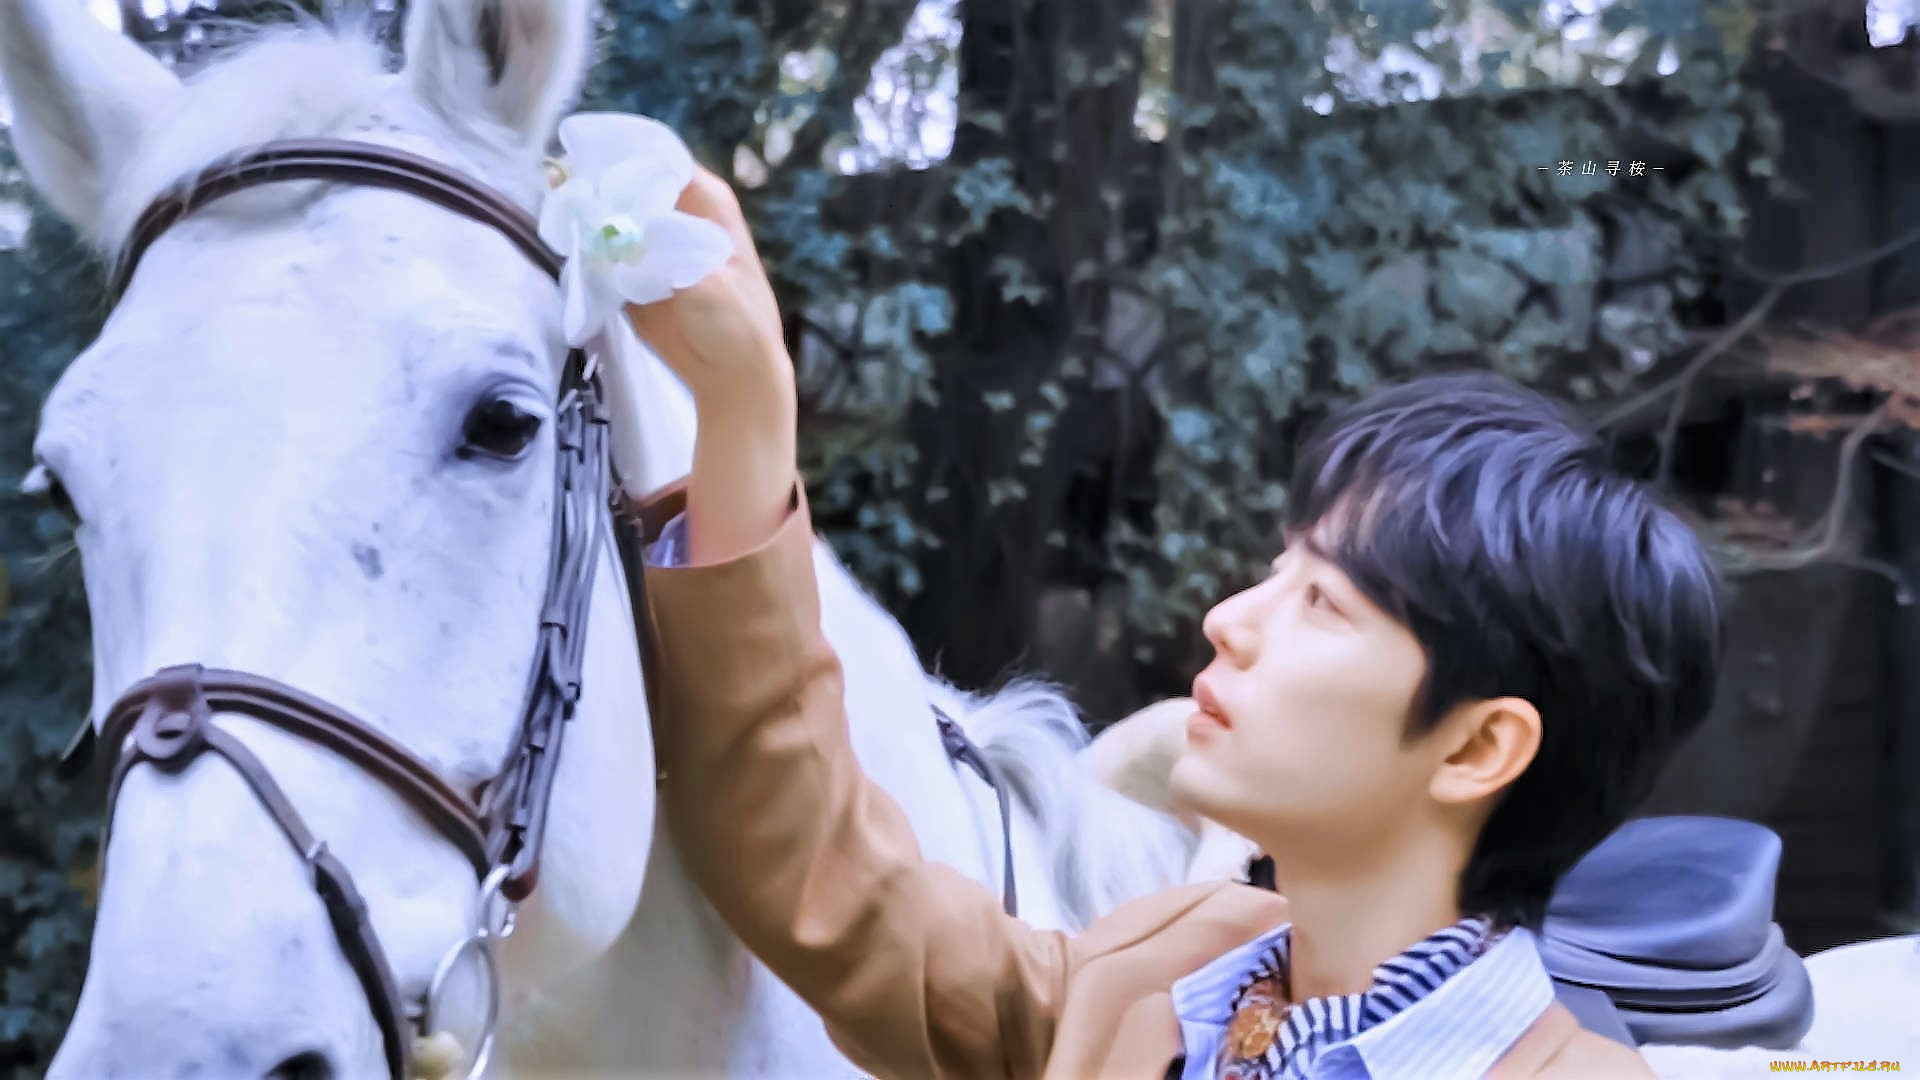 мужчины, xiao, zhan, актер, цветок, лошадь